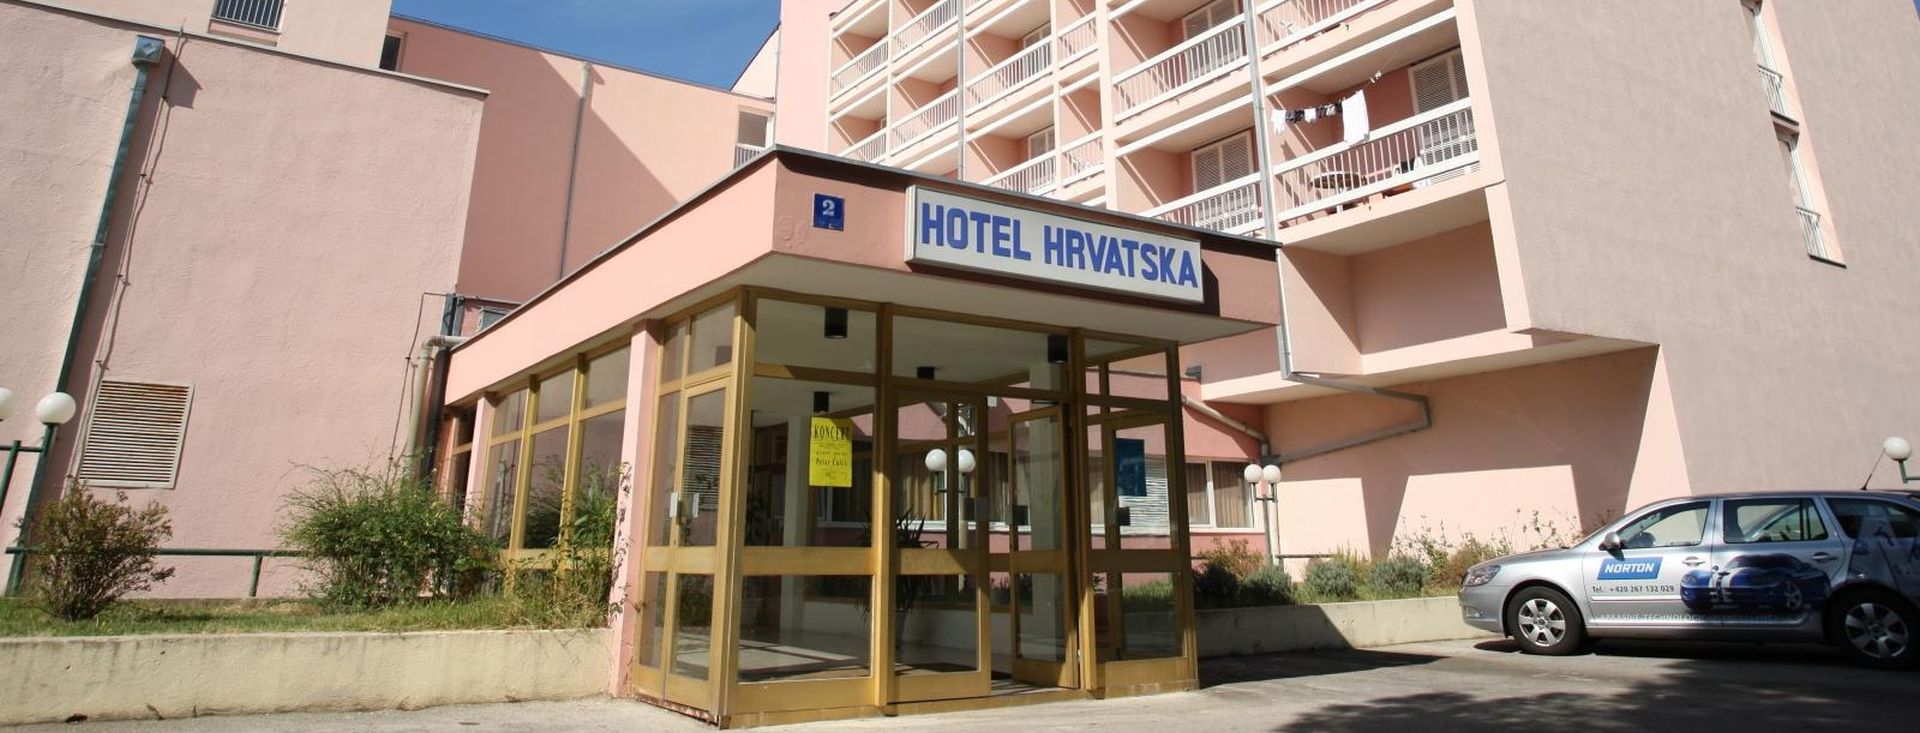 15.09.2010., Baska Voda - Hotel Hrvatska u Baskoj Vodi.
Photo: Ivo Cagalj/PIXSELL